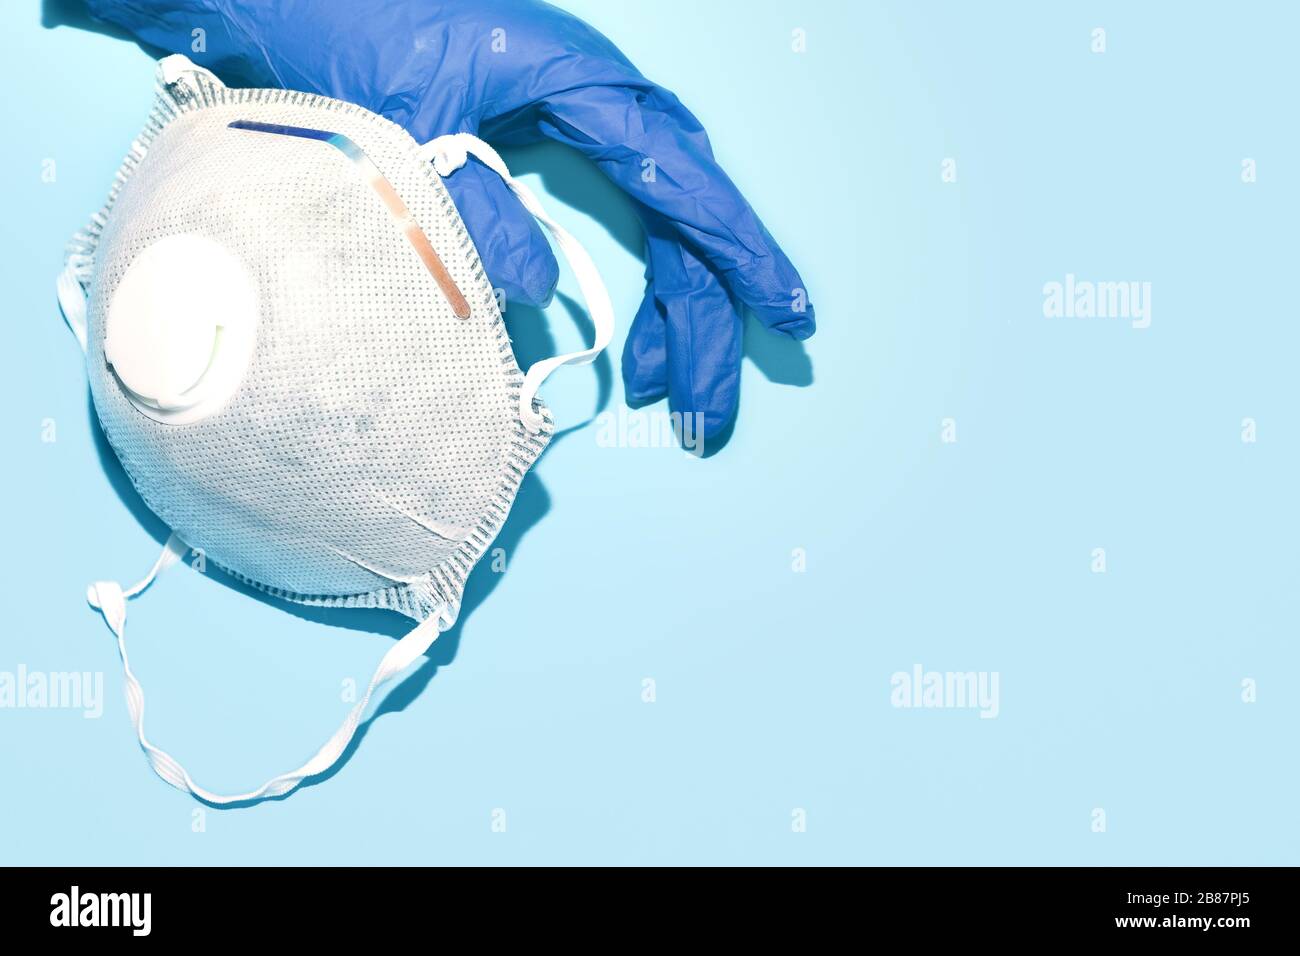 Novel coronavirus disease 2019-nCoV hand with medical gloves and breathing mask Stock Photo